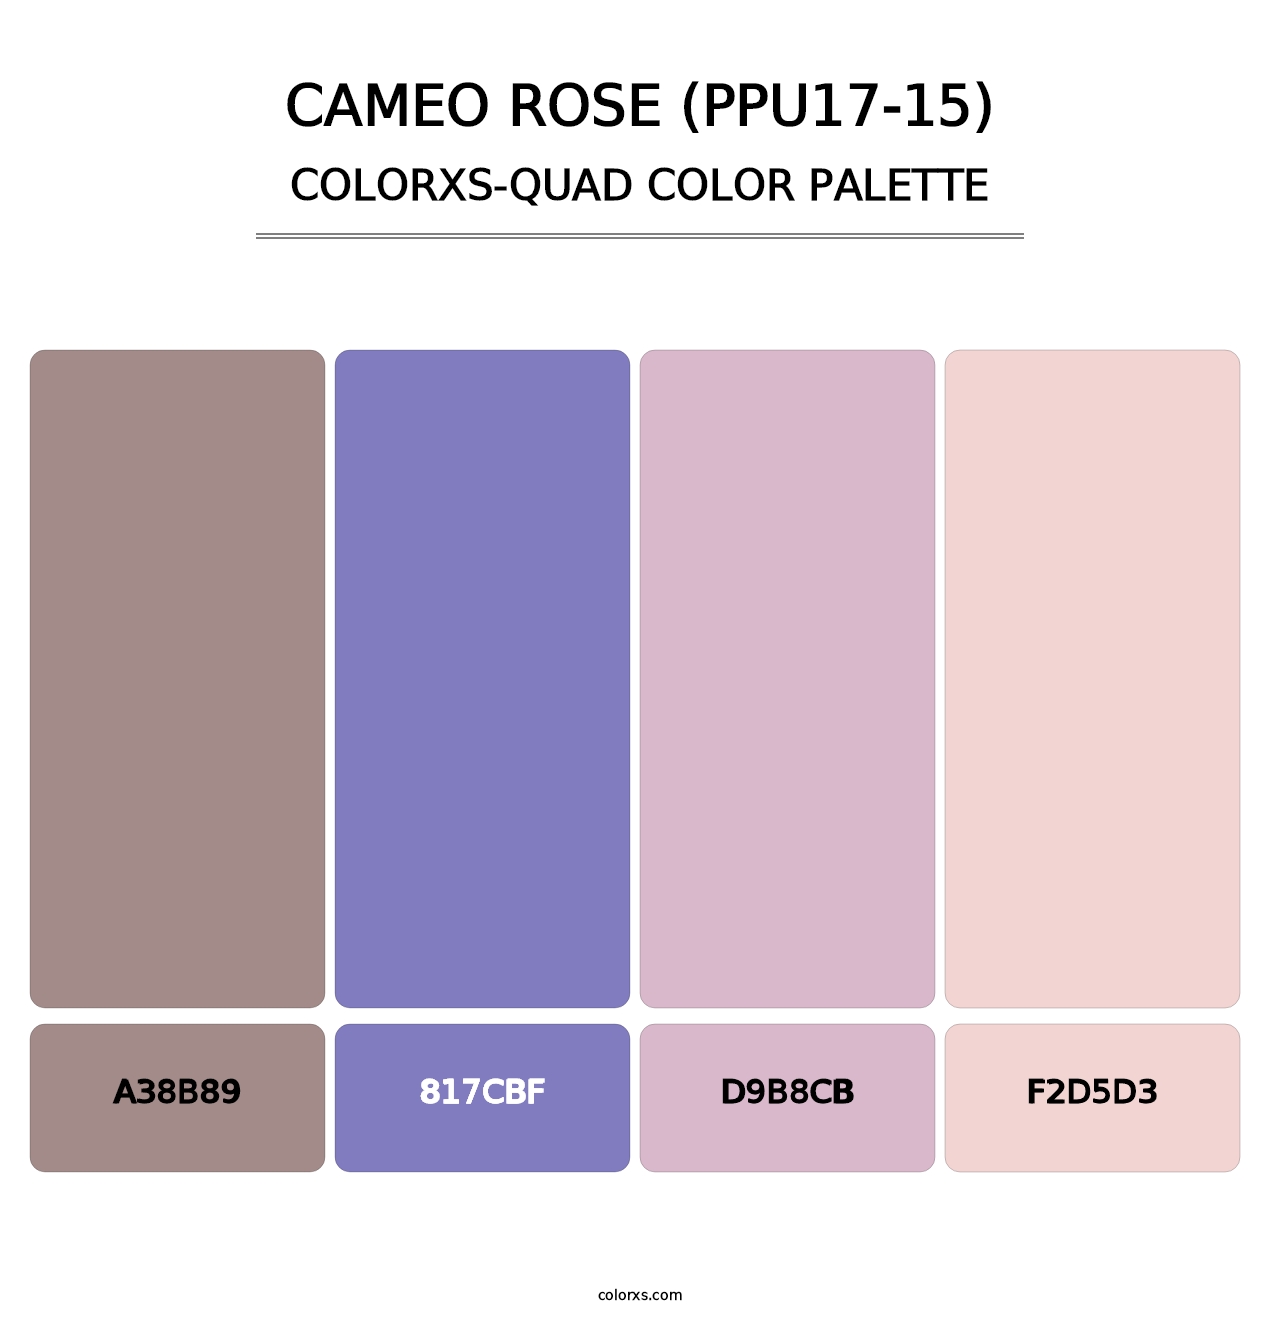 Cameo Rose (PPU17-15) - Colorxs Quad Palette